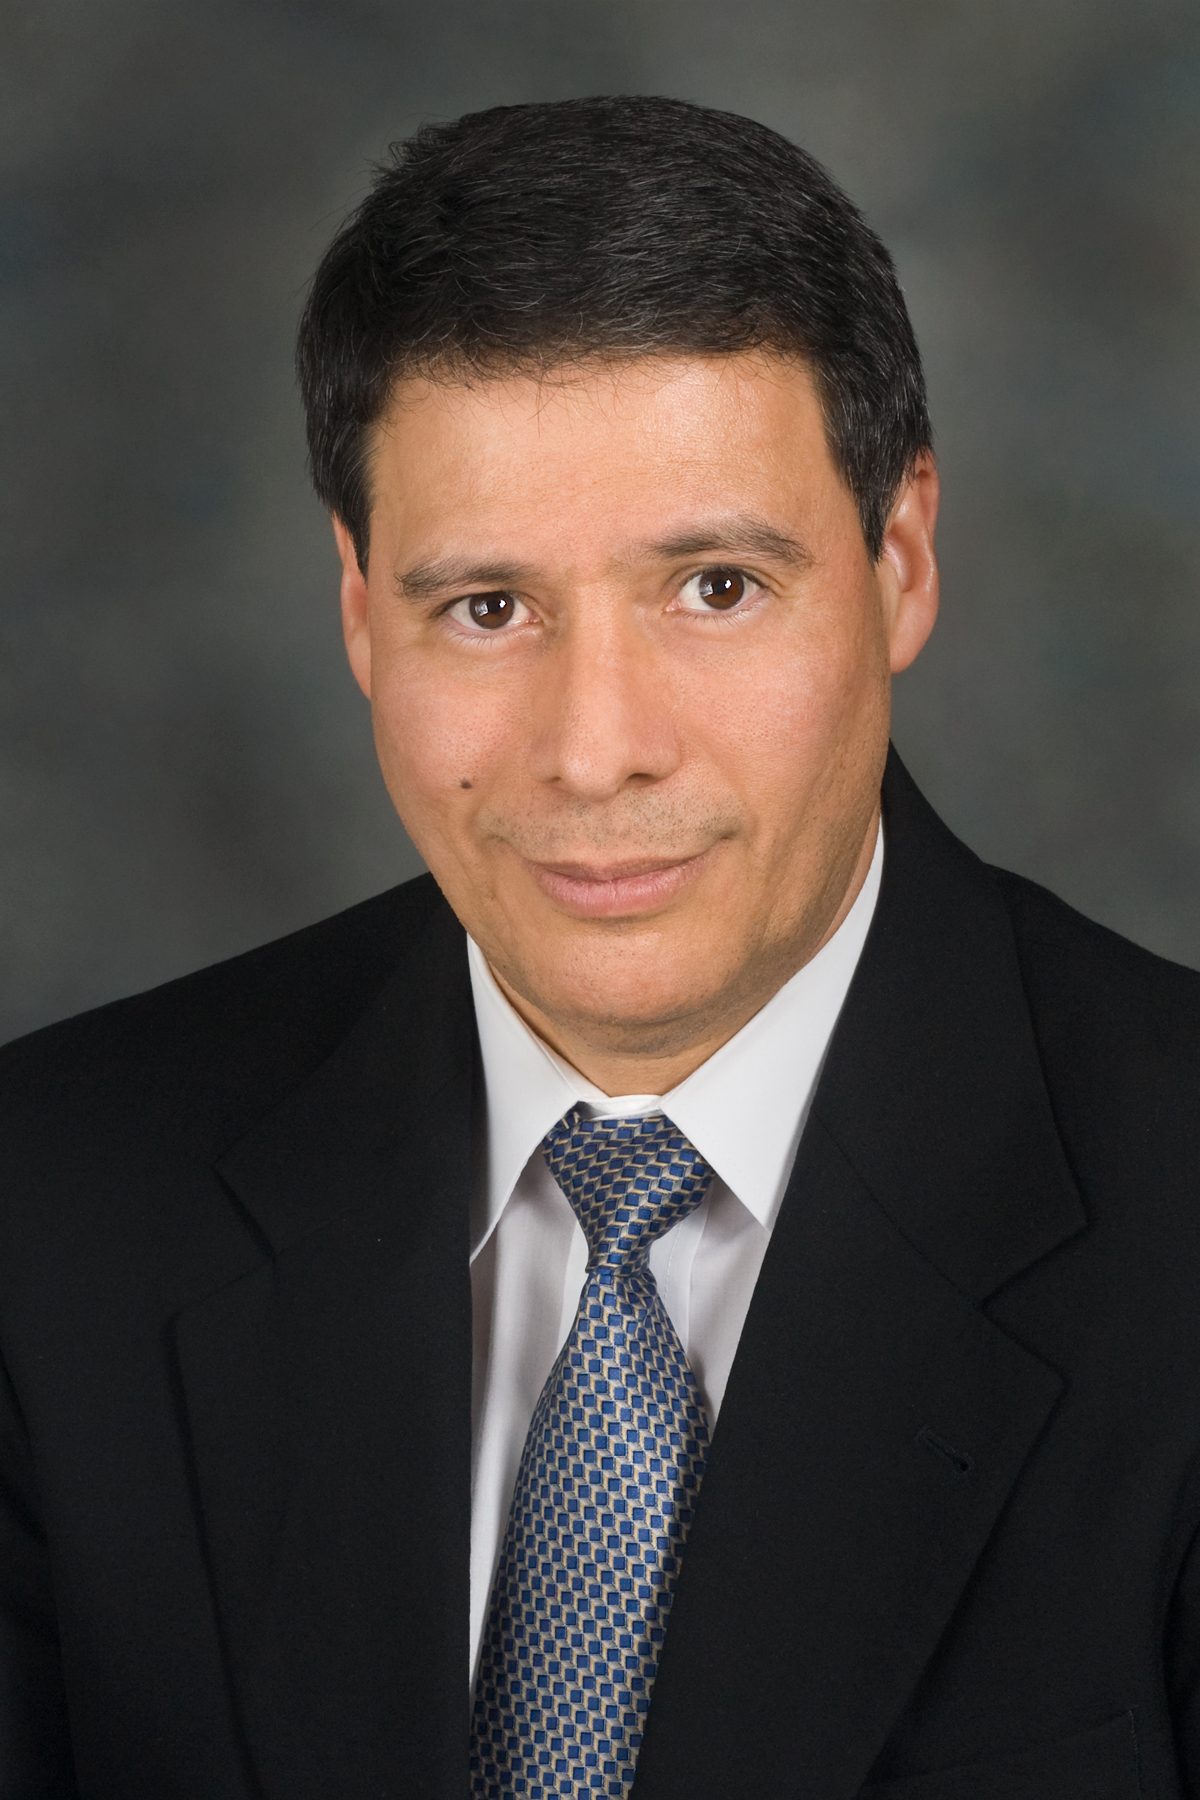 Carlos E. Bueso-Ramos Image